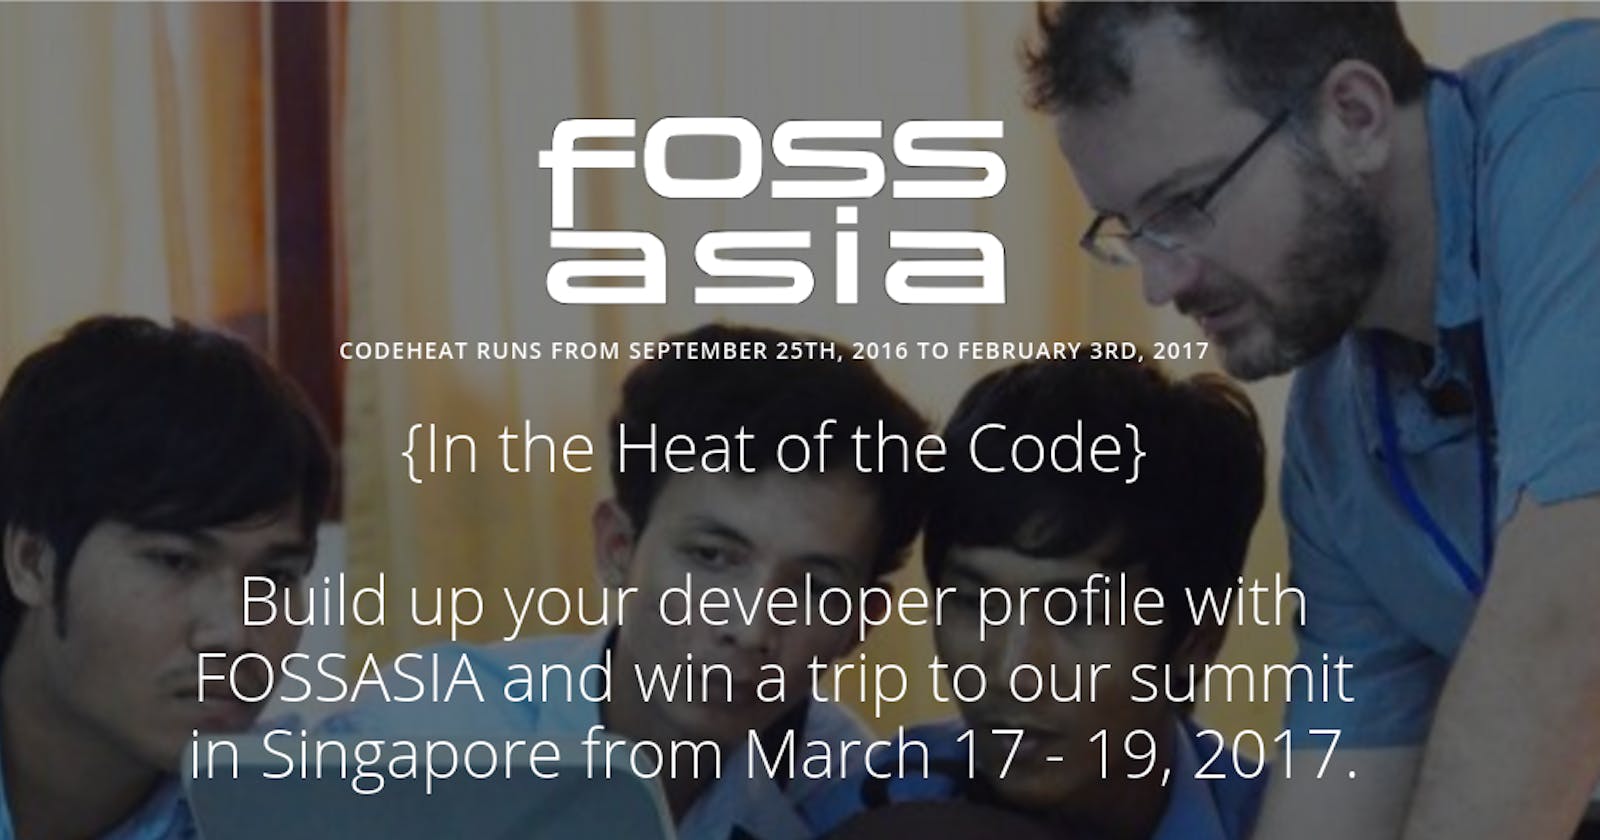 My Journey Through Fossasia’s Codeheat Contest